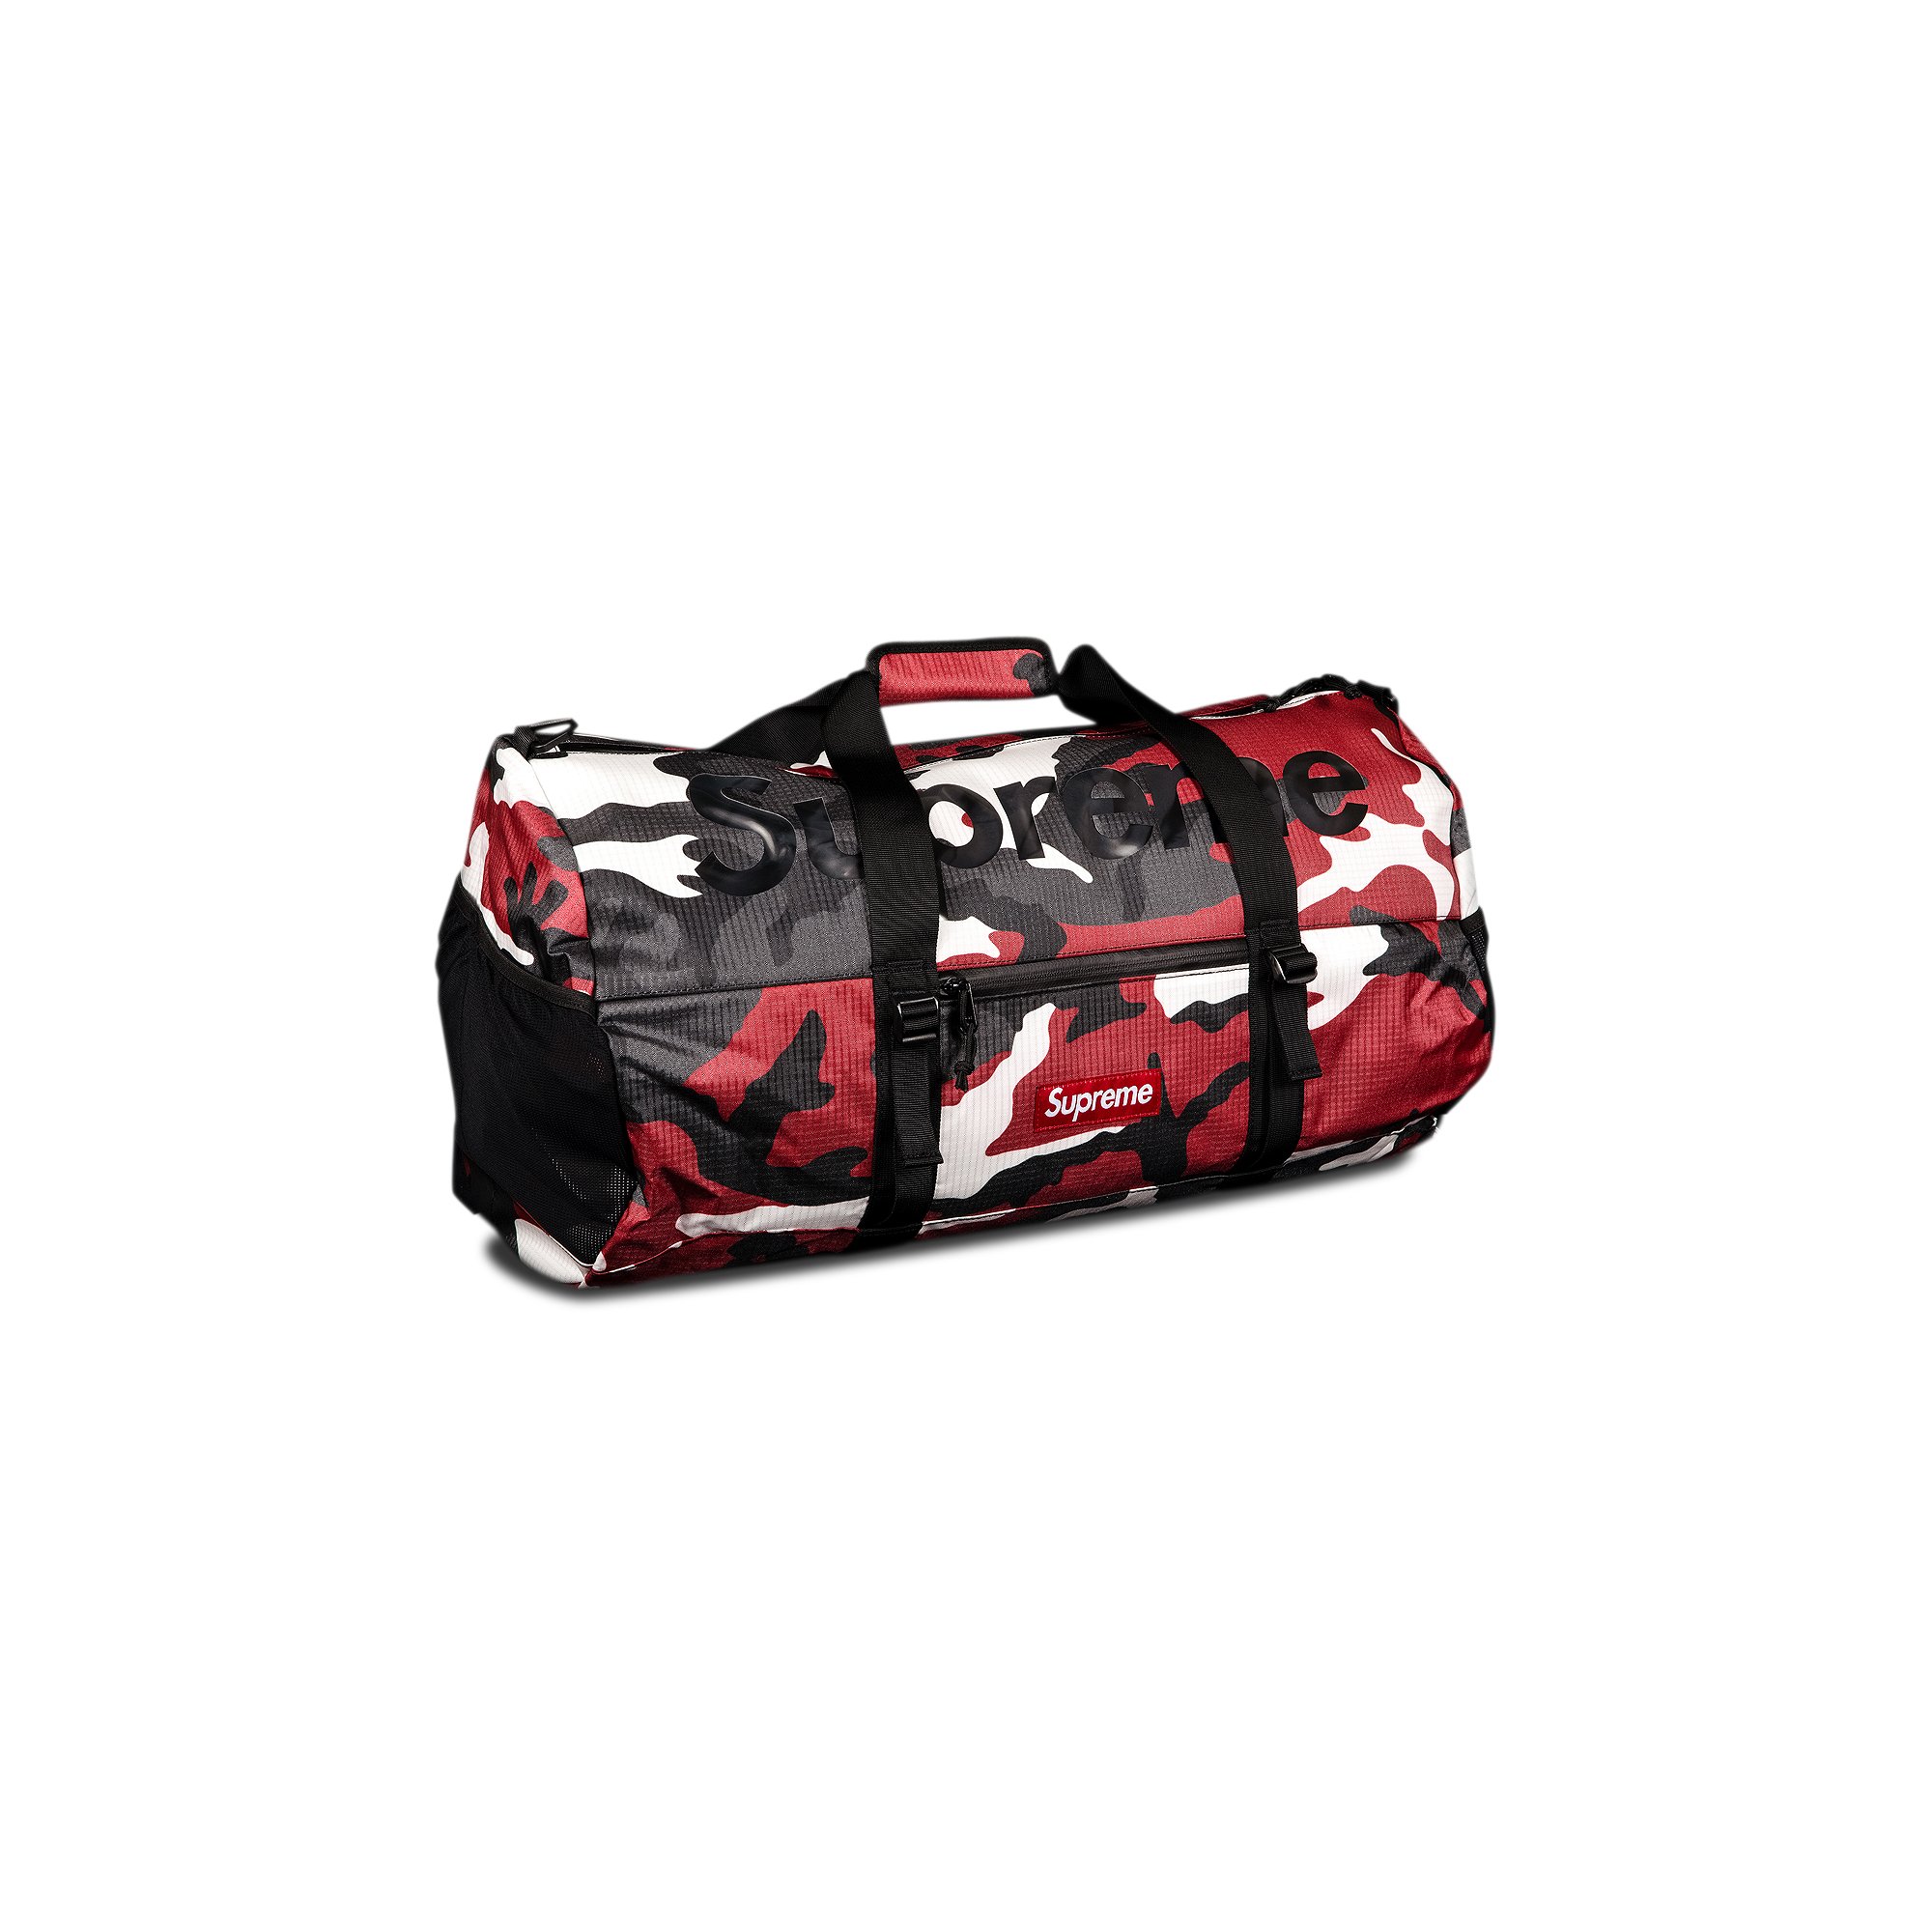 Buy Supreme Duffle Bag 'Red Camo'   SSB RED CAMO   GOAT